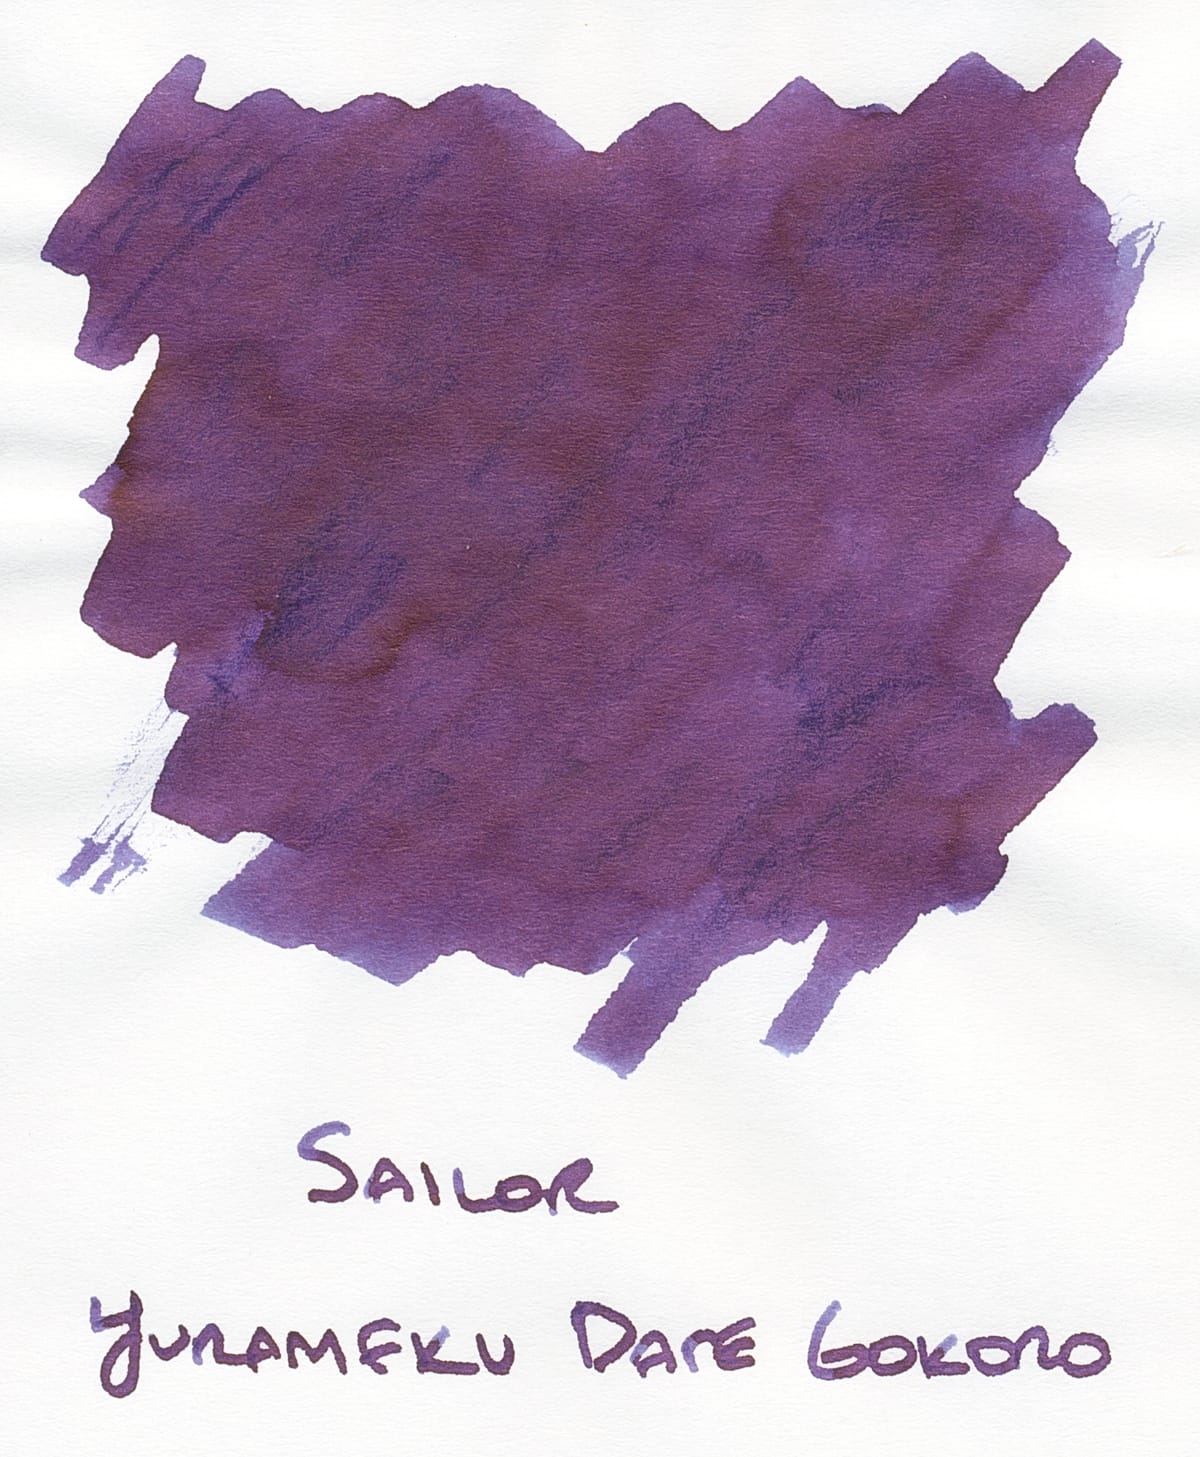 Scan of an ink swatch of a bluish purple fountain pen ink with reddish chromoshading labeled Sailor Yurameku Date Gokoro